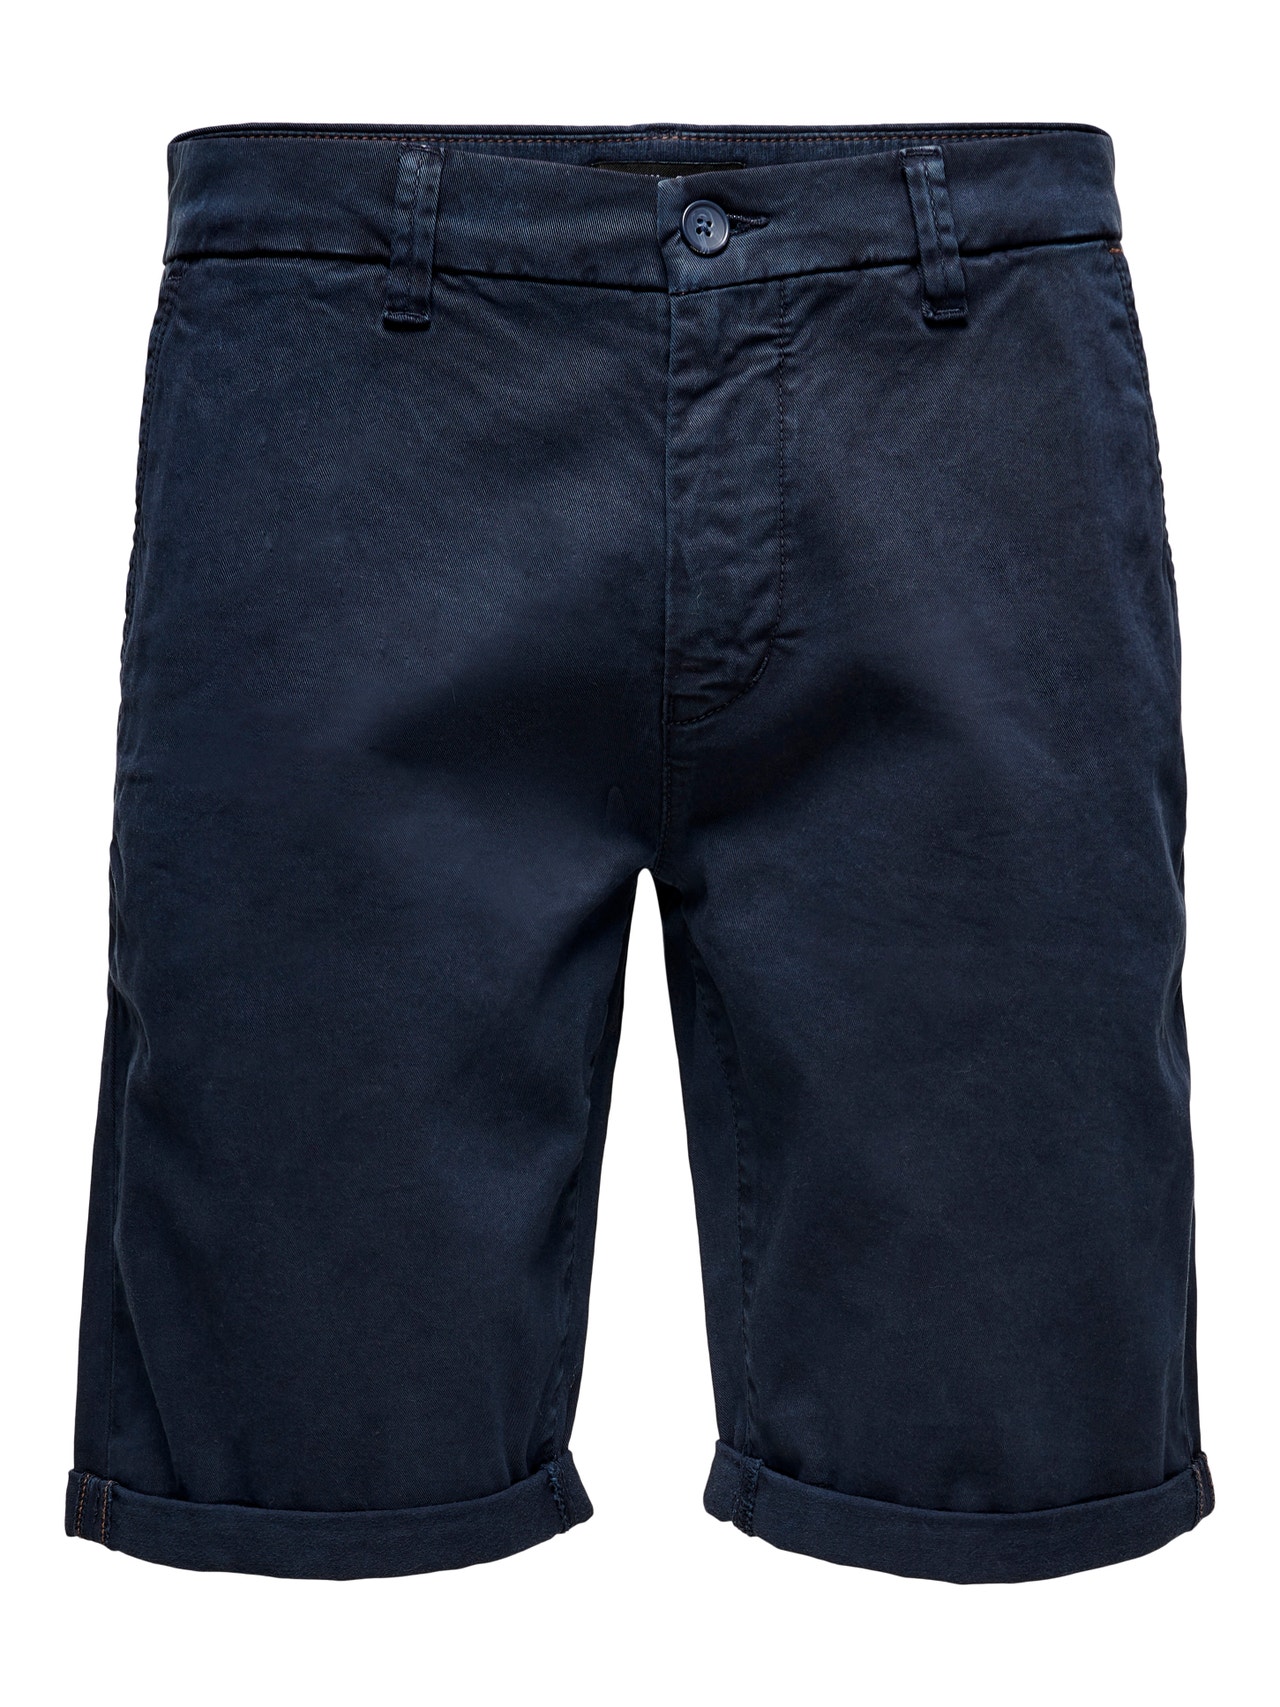 ONLY & SONS Mid waist Shorts -Dark Navy - 22021460